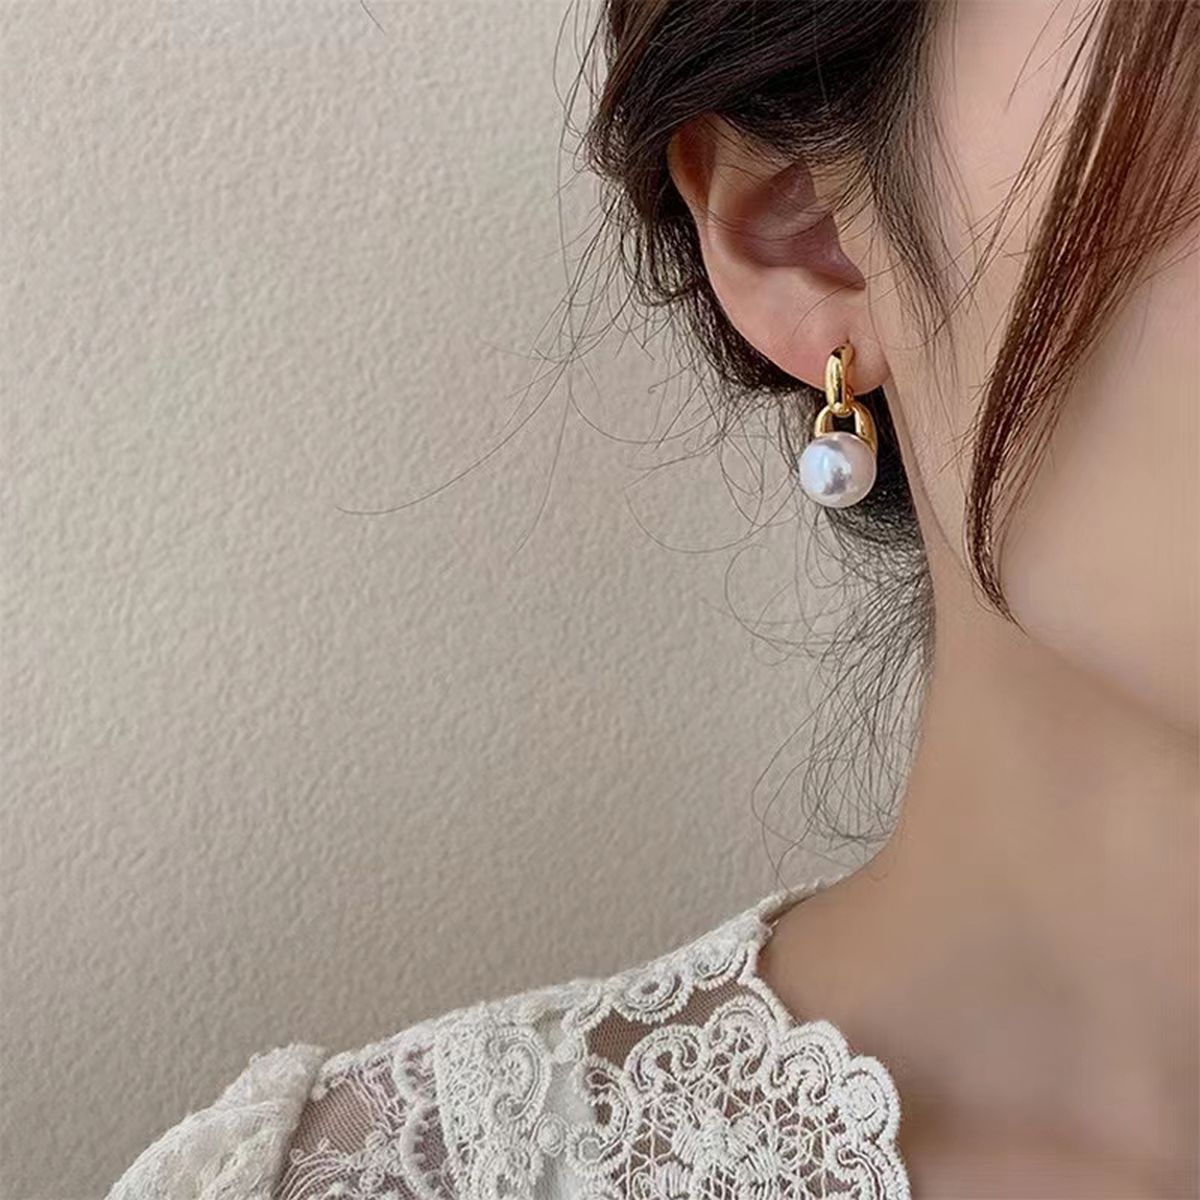 Lock Stud Earrings in Gold | Simple Studs | Uncommon James